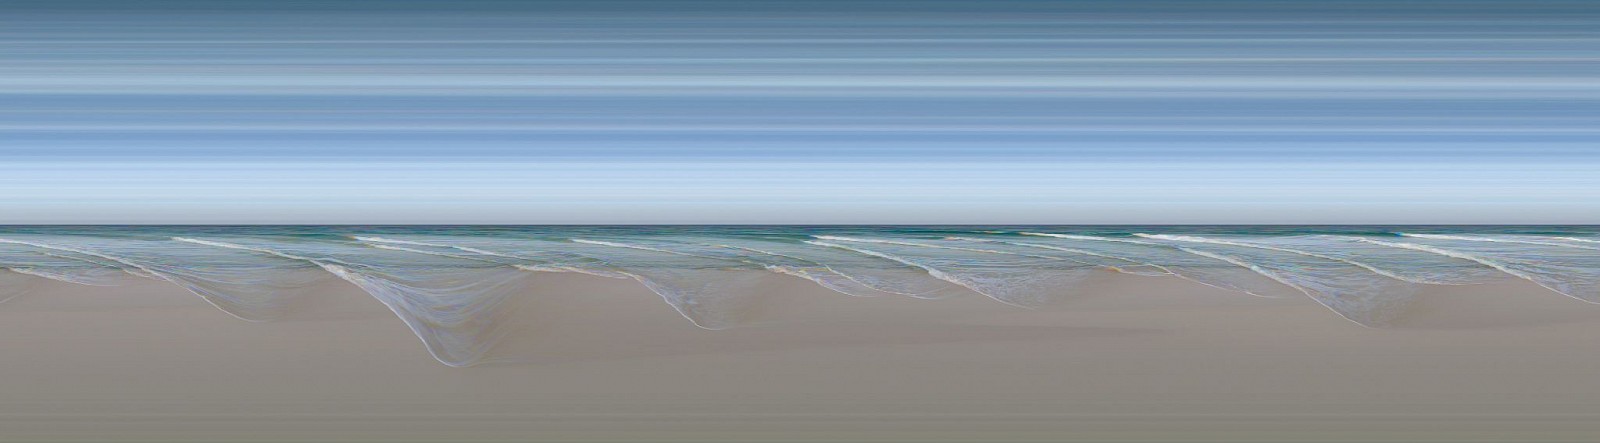 Jay Mark Johnson, COZUMEL WAVES #2, 2009 Cozumel MX
archival pigment on paper, mounted on aluminum, 40 x 144 in. (101.6 x 365.8 cm)